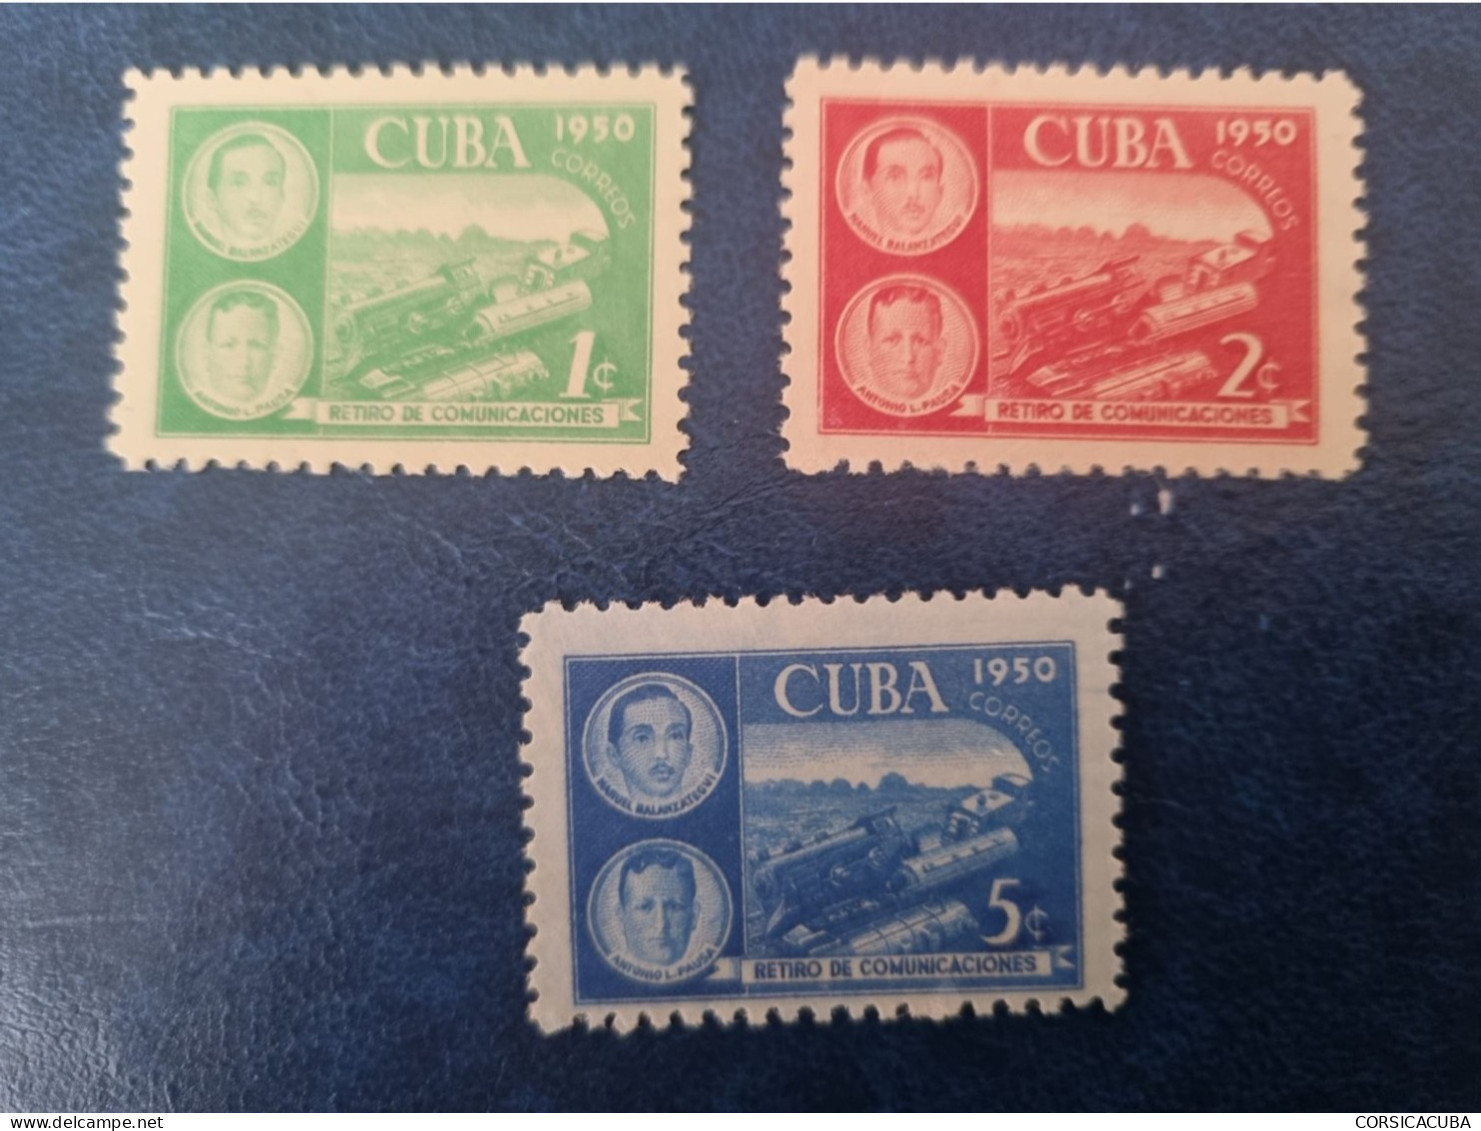 CUBA  NEUF  1950    RETIRO  DE  COMUNICACIONES  //  PARFAIT  ETAT  //  1er  CHOIX  // - Ungebraucht